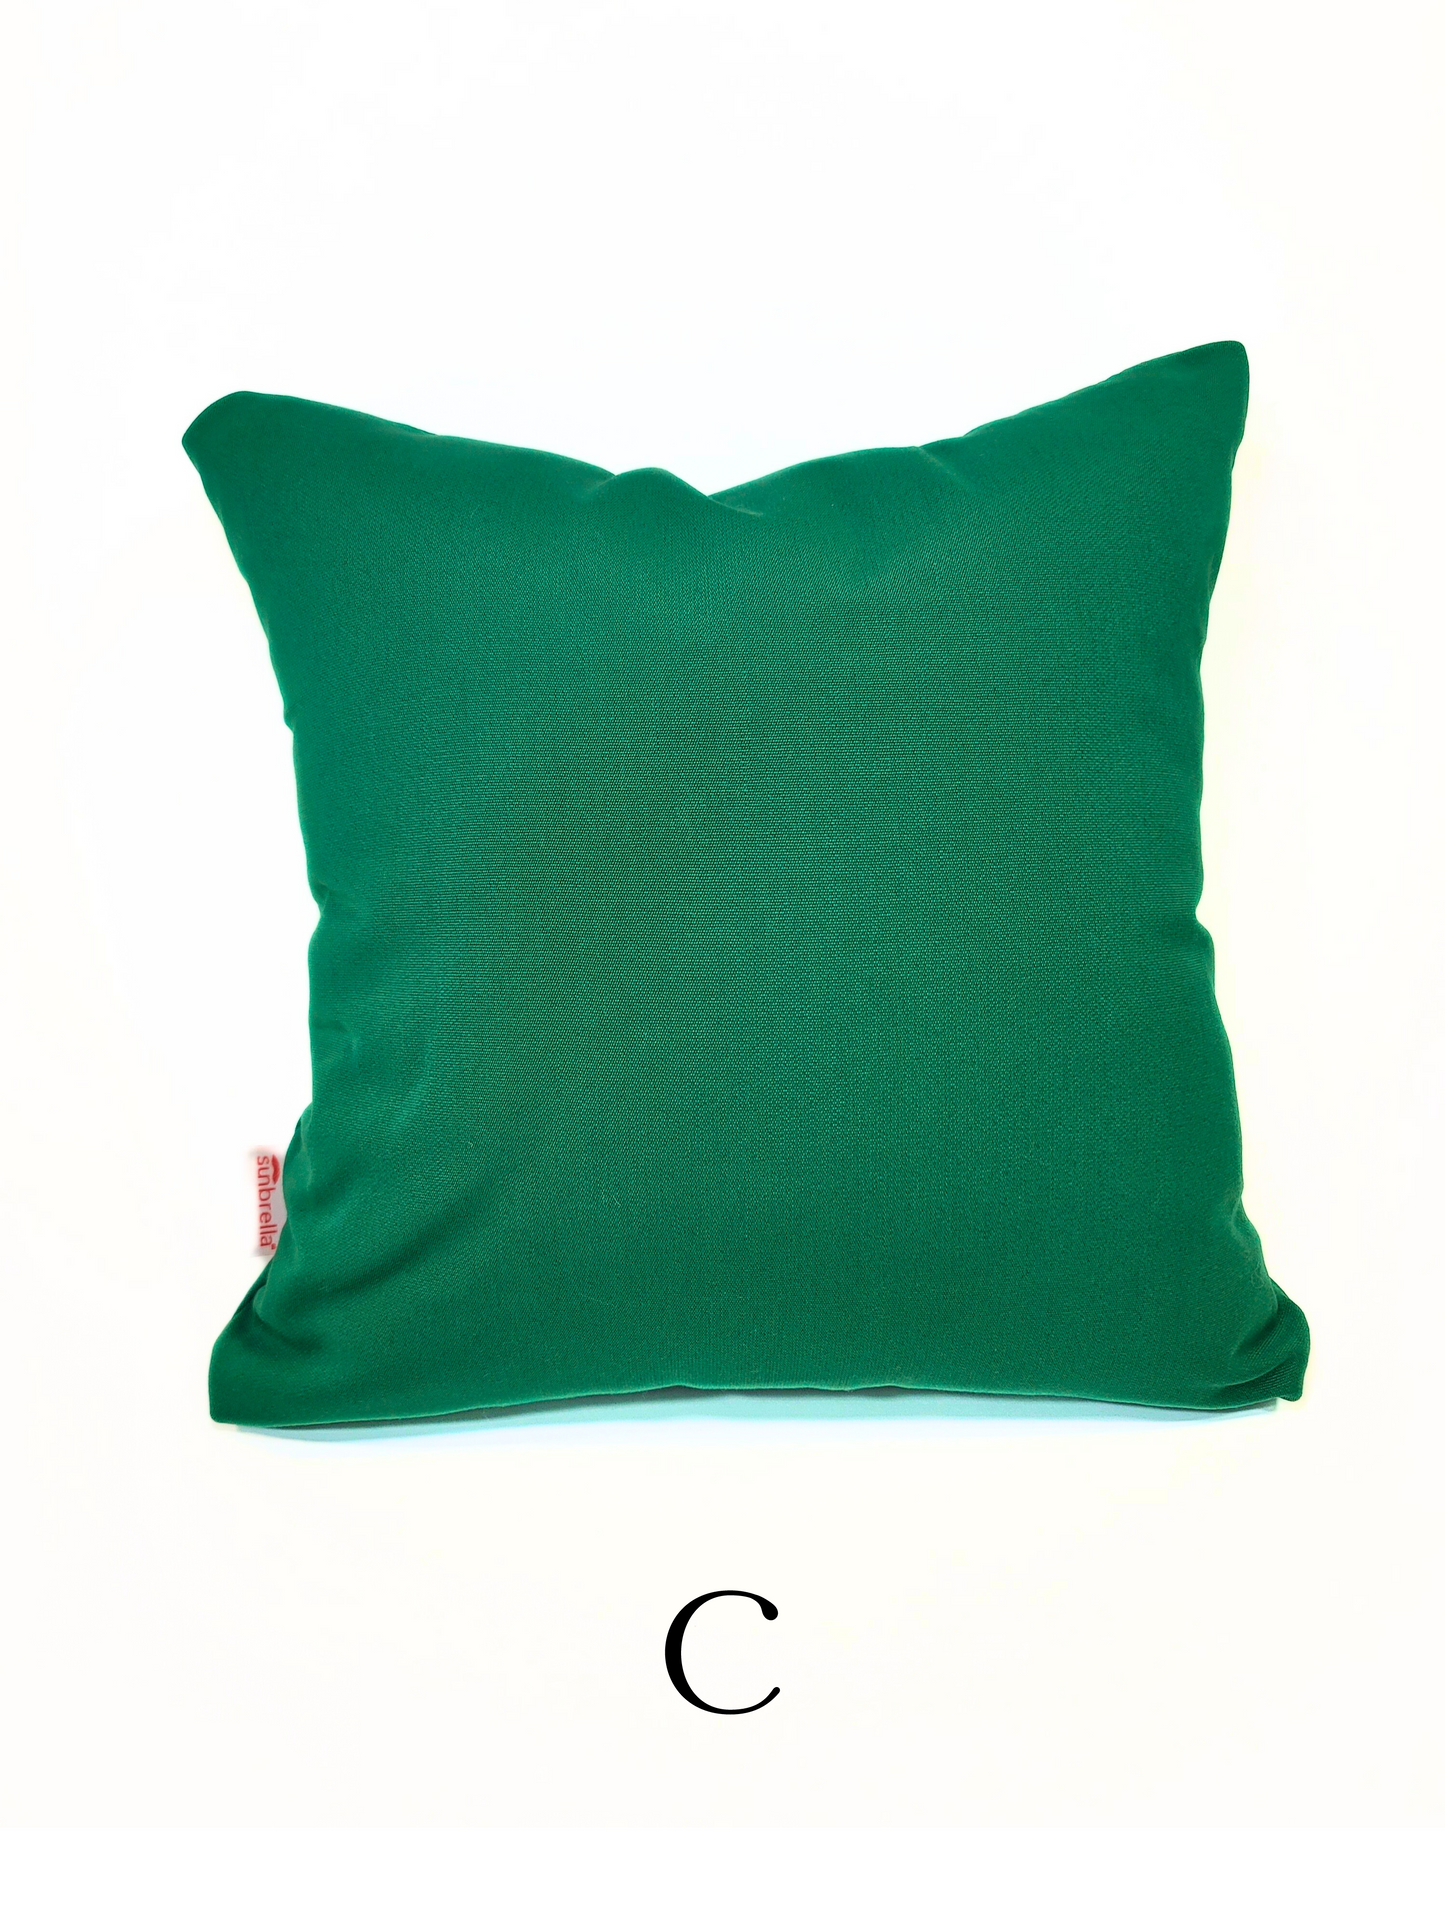 Sunbrella "Canvas Forest Green" Indoor/Outdoor Toss Pillow Cover